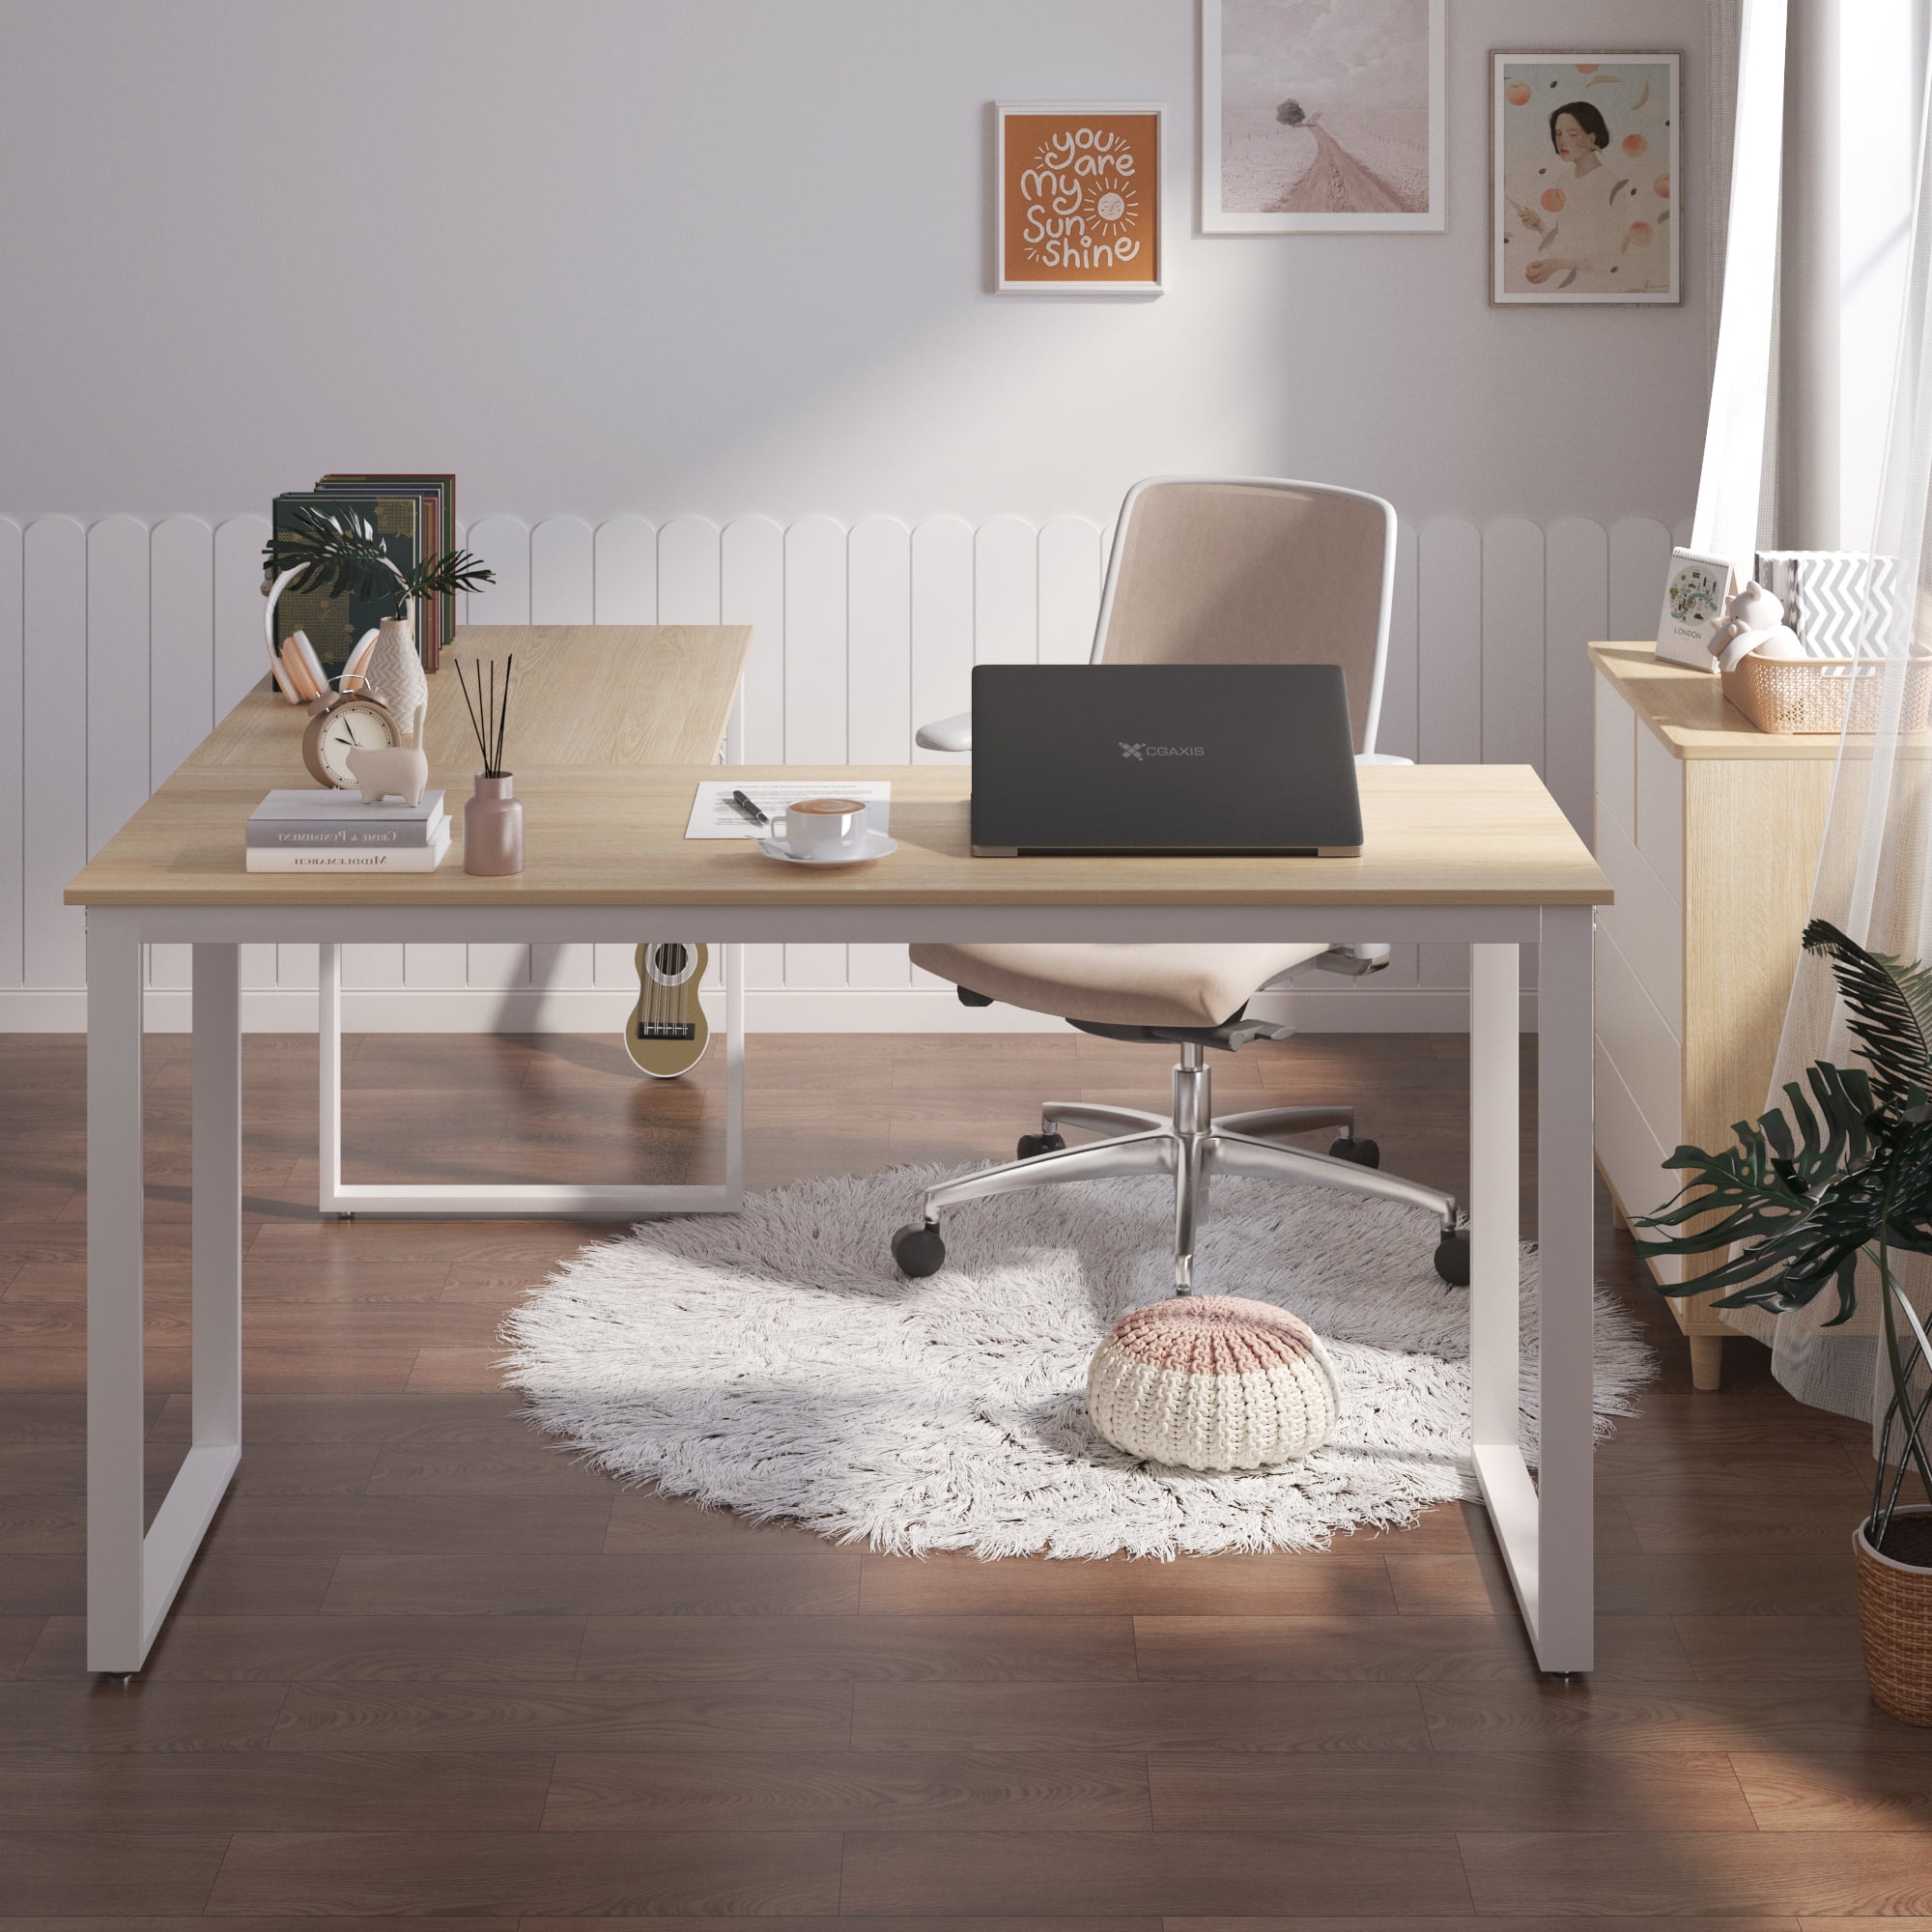 Corner desk 4 shelves white furniture bedroom desk modern furniture gaming  table with shelf study table